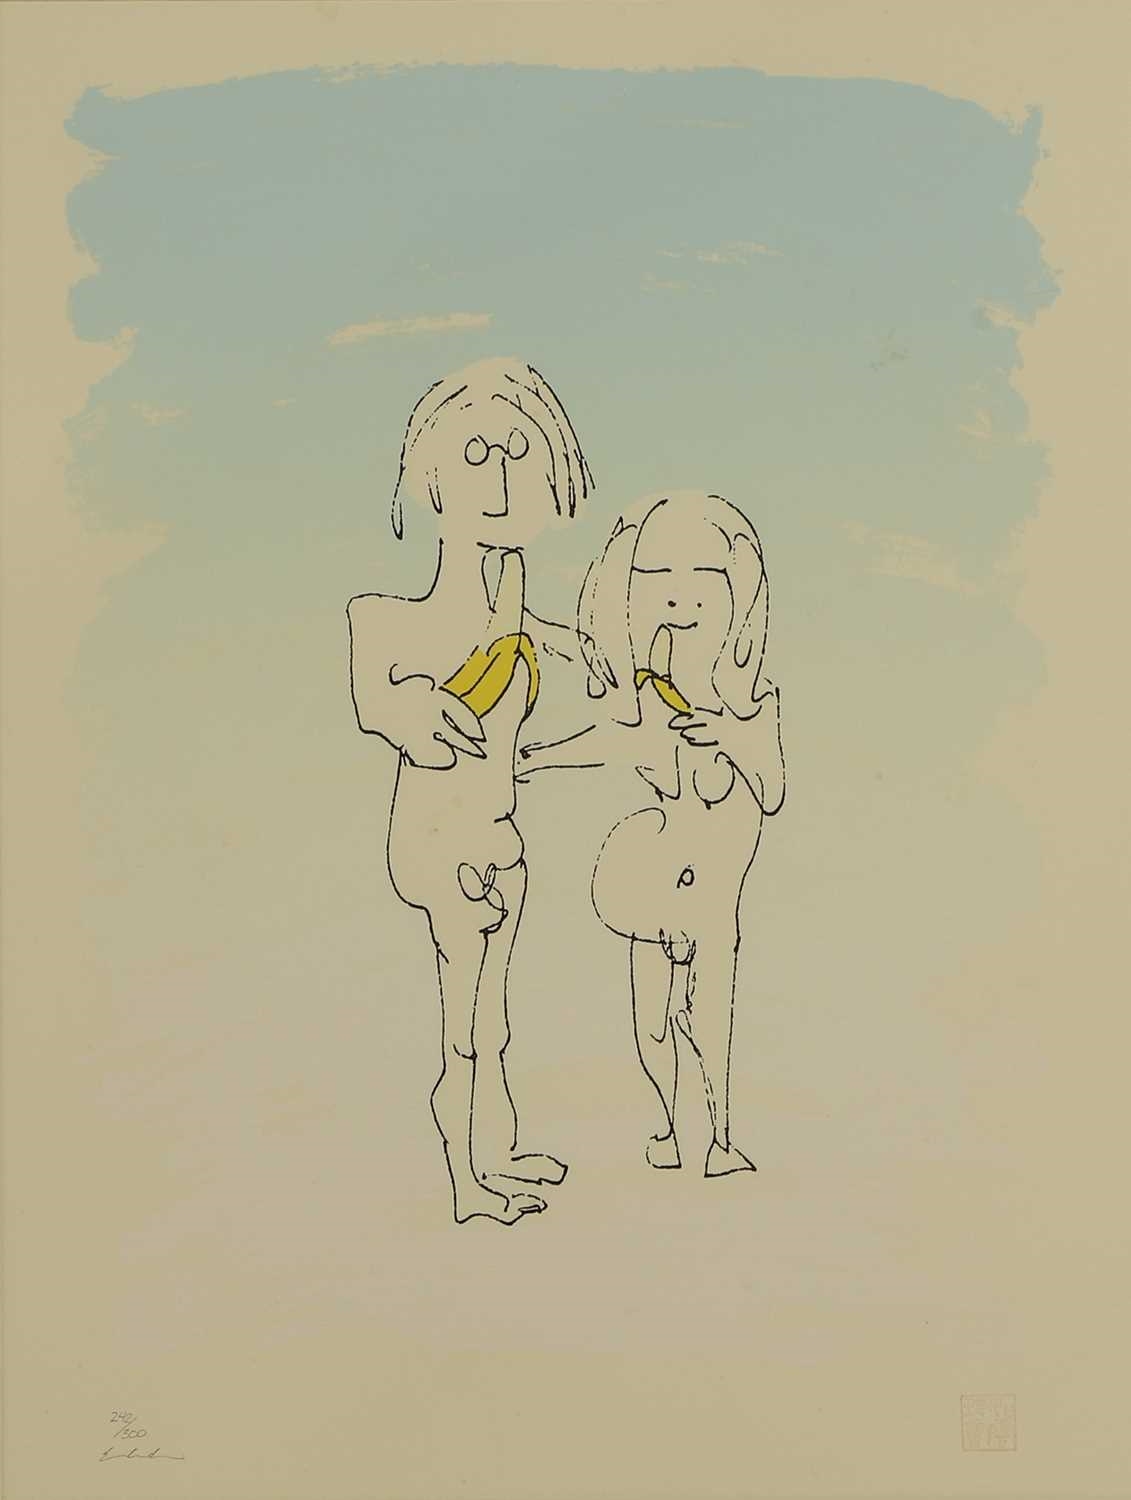 Two Virgins by John Lennon, ▴ John Lennon (1940-1980) and Yoko Ono (Japanese, b.1933)
 ,'Two Virgins'
 ,serigraph in colours